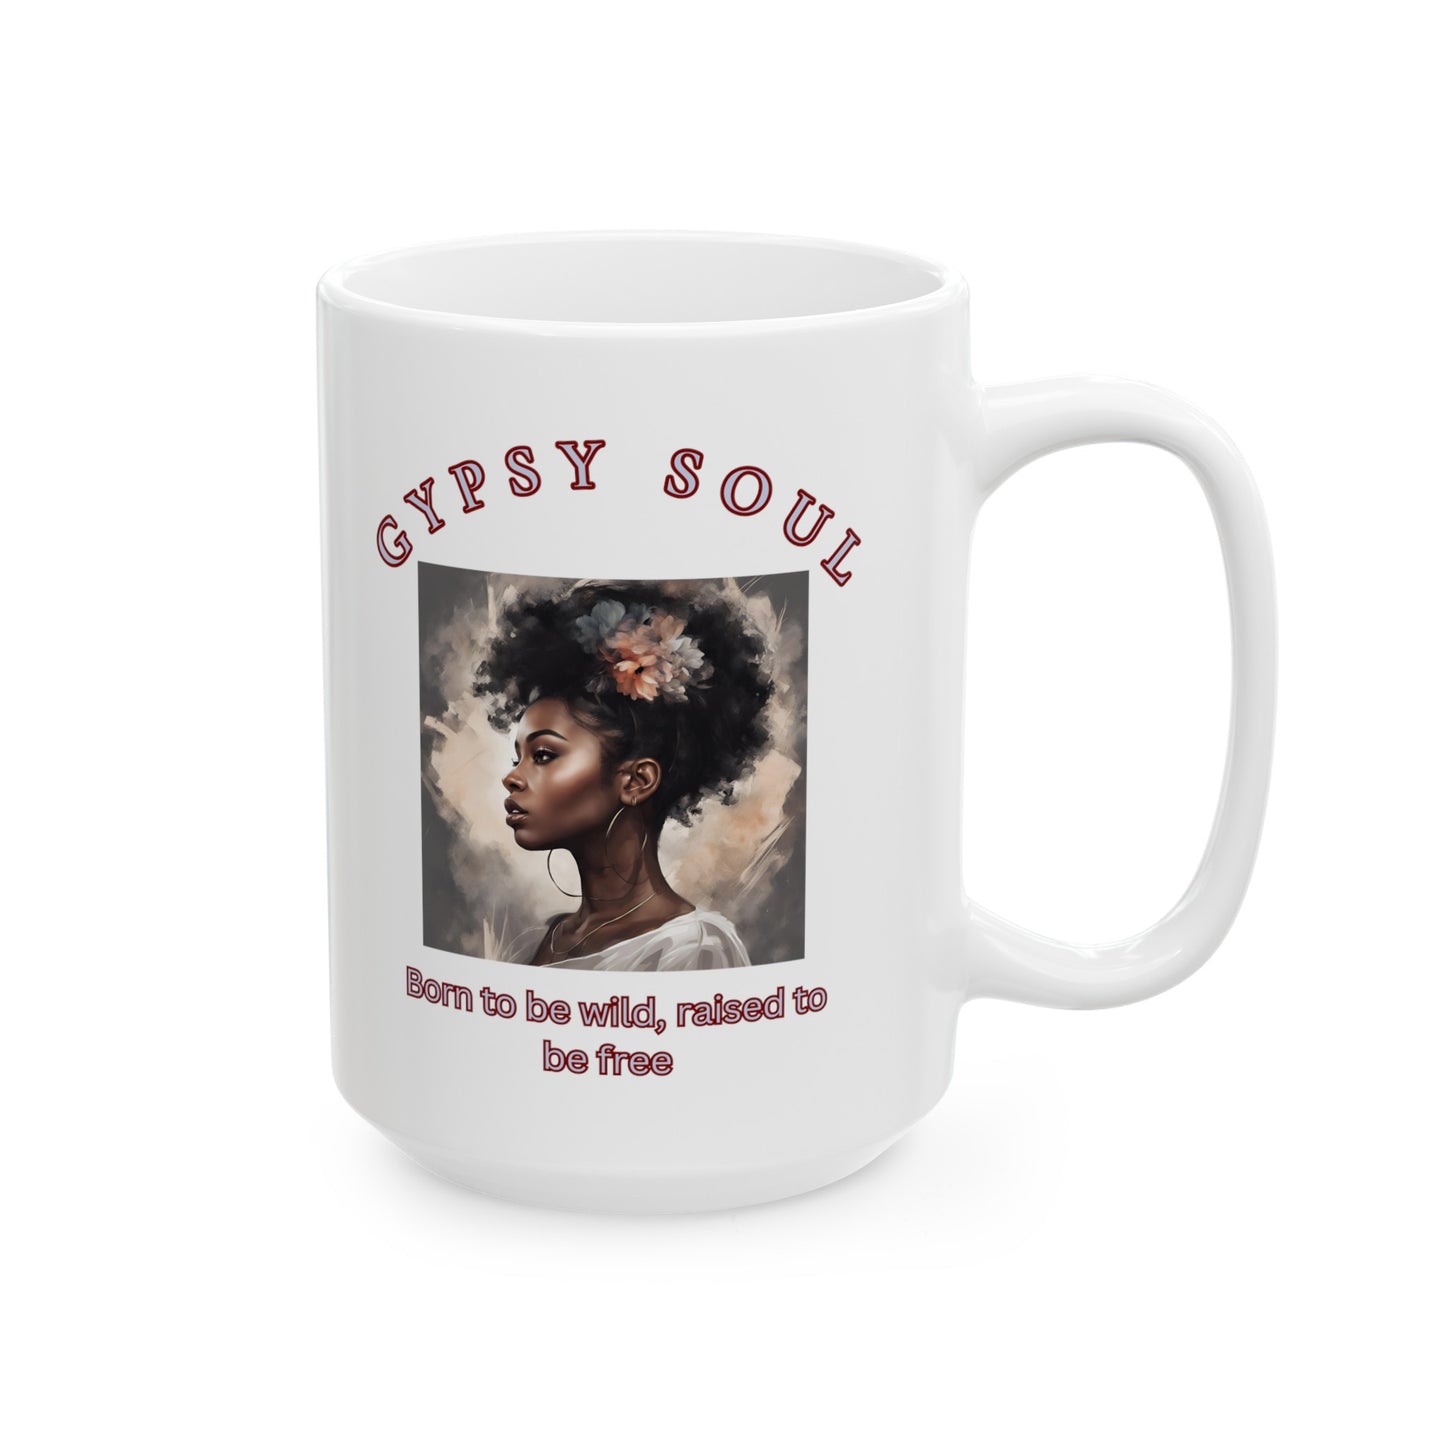 Gypsy Soul Woman Born to be wild! Ceramic Mug, Born to be wild mug, Mothers day, mom nana daughter gift, Birthday bestie gift